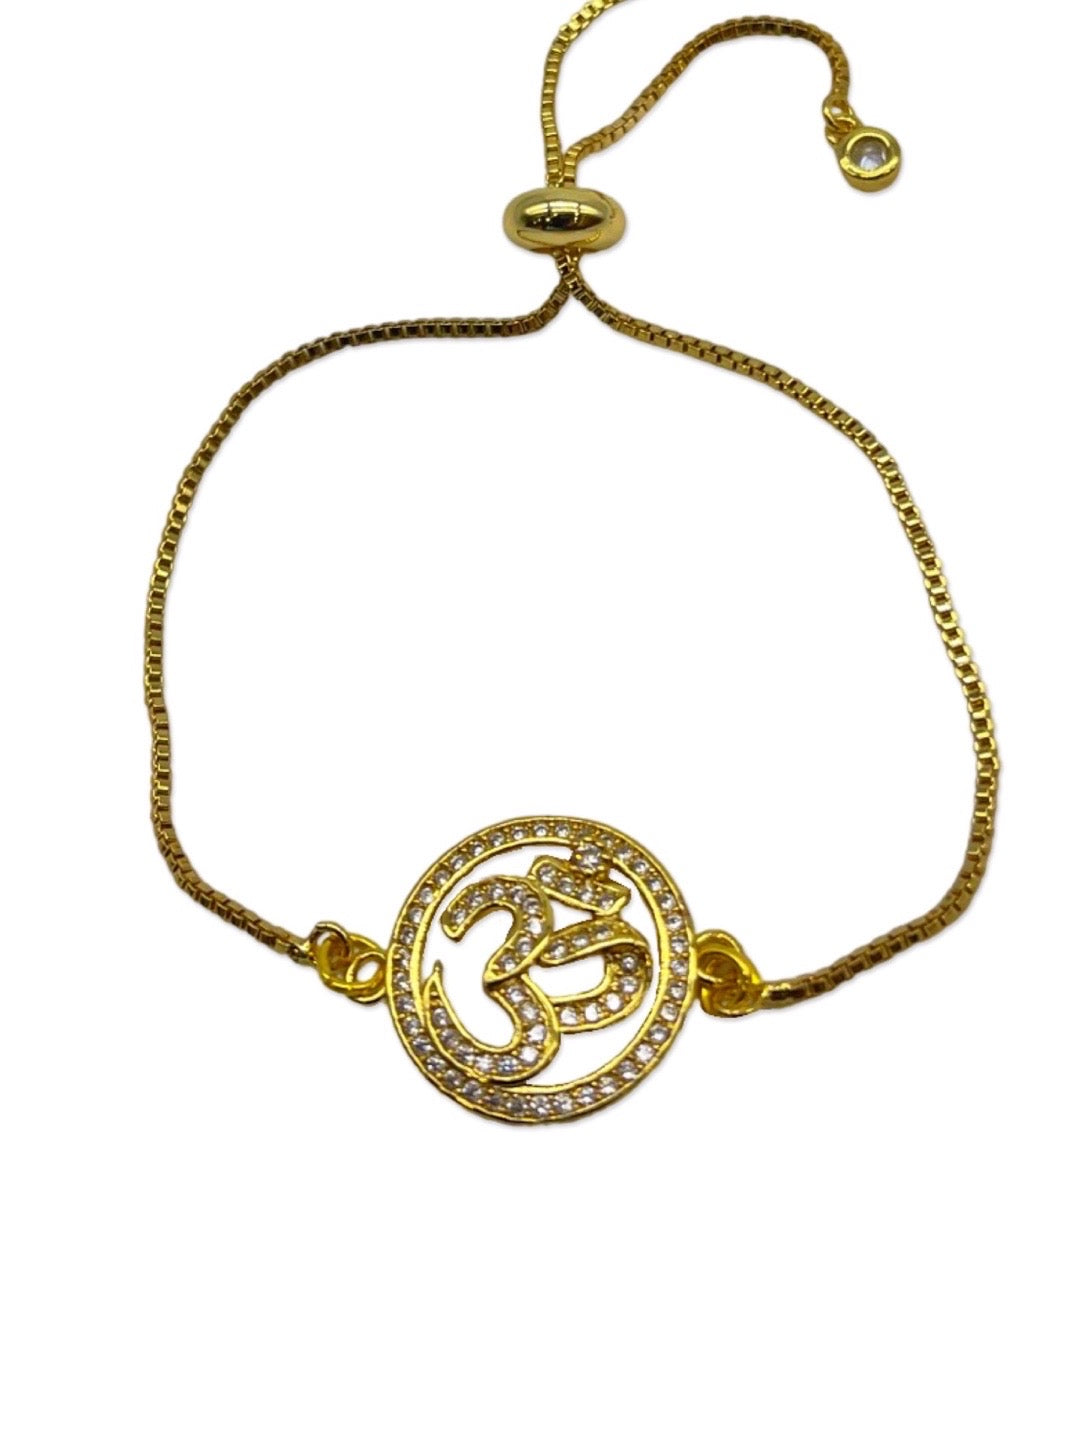 OM Black Gold Leather Bracelet for Men | eBay